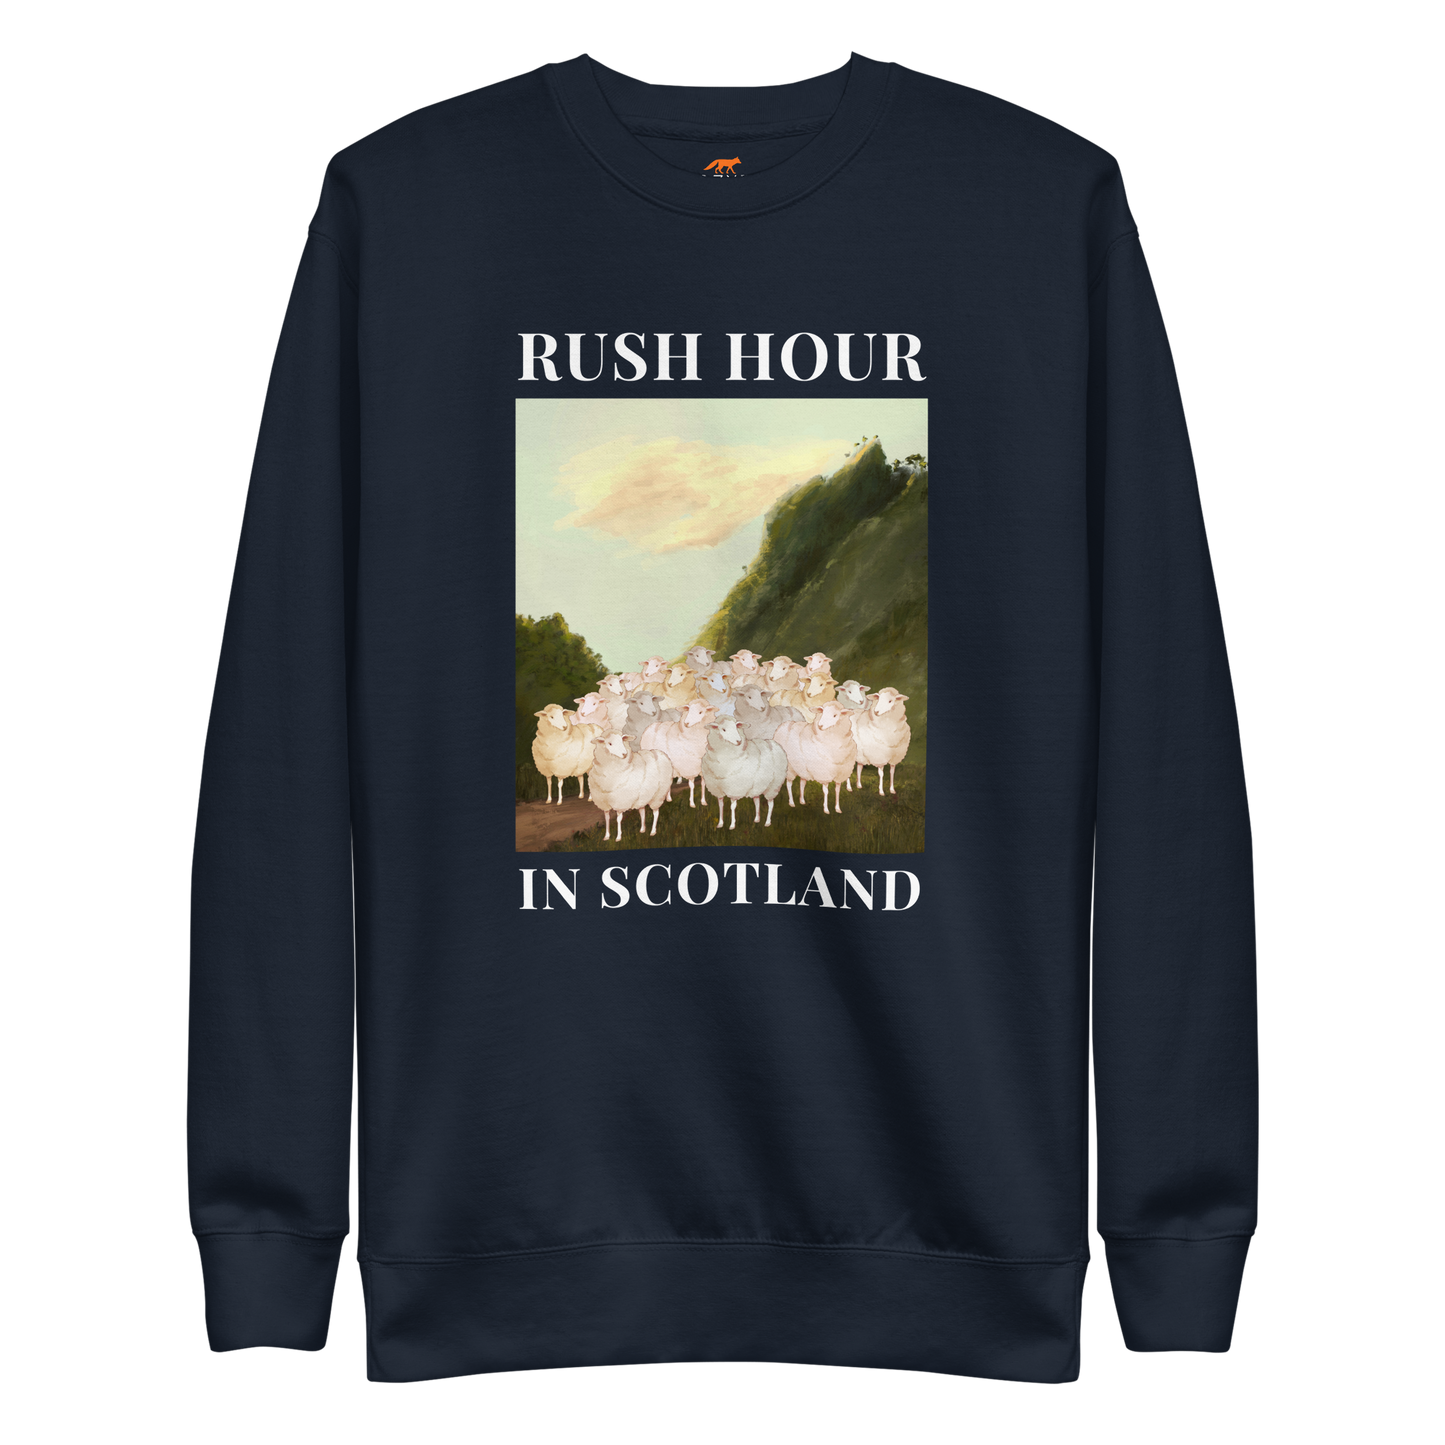 Navy Blazer Premium Sheep Sweatshirt featuring a comical Rush Hour In Scotland graphic on the chest - Artsy/Funny Graphic Sheep Sweatshirts - Boozy Fox